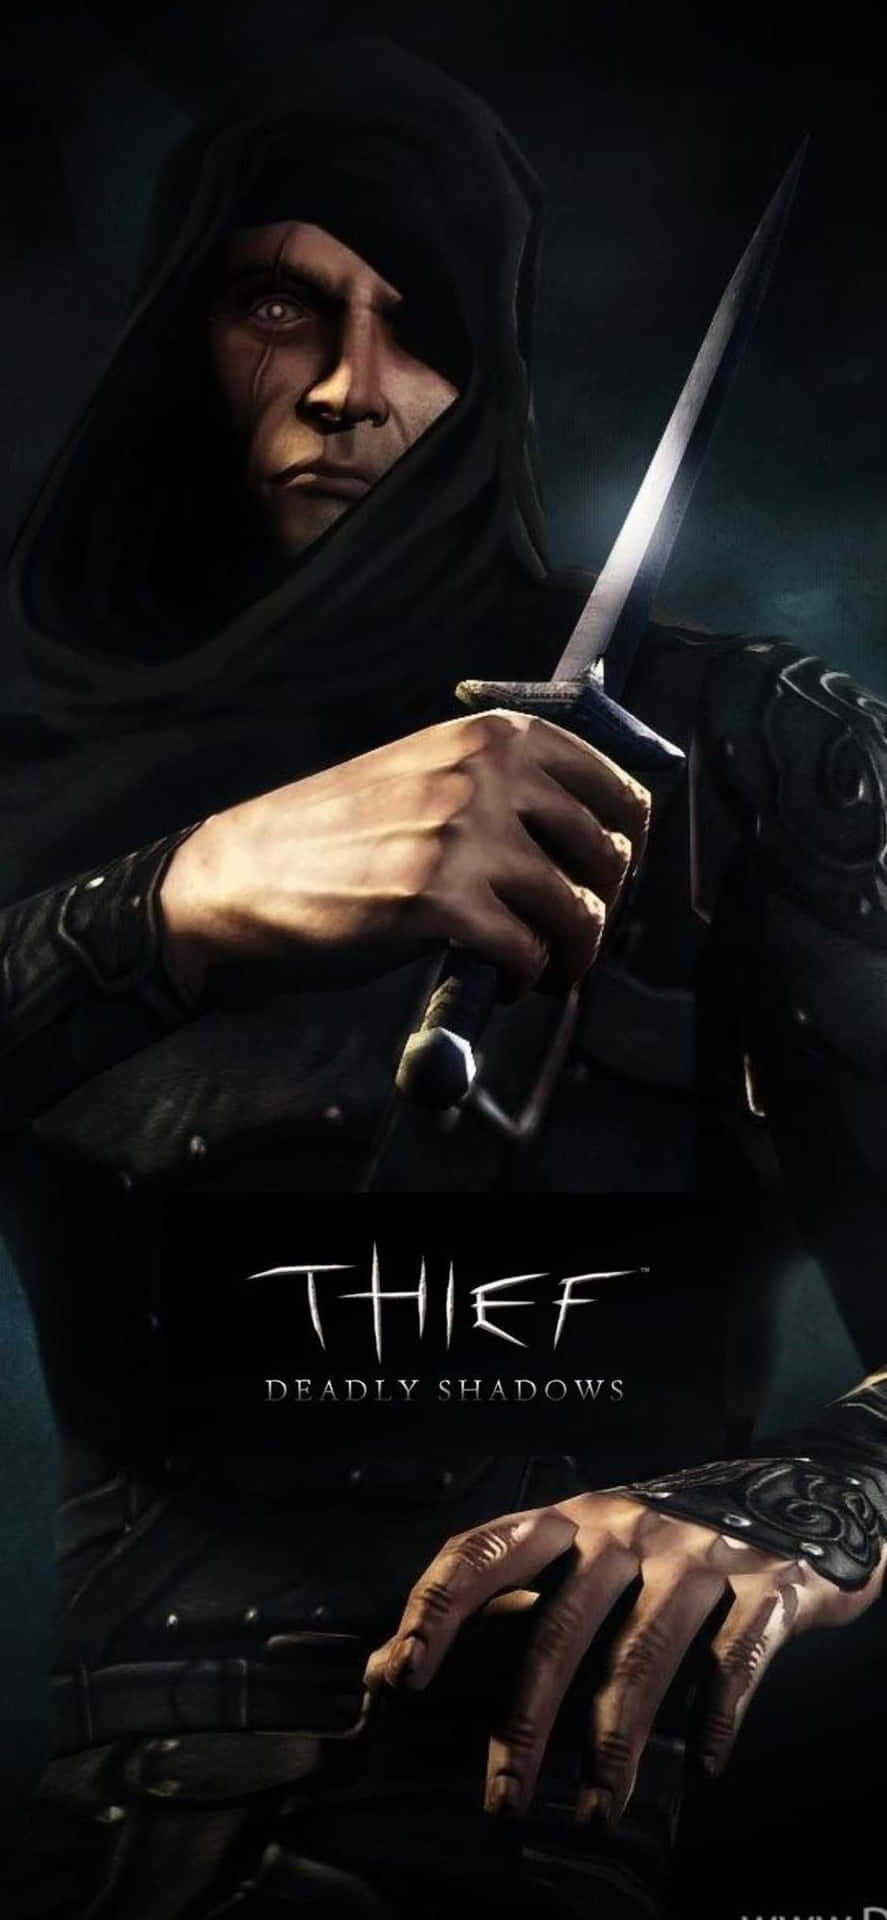 Thief Deadly Shadows - Wallpaper